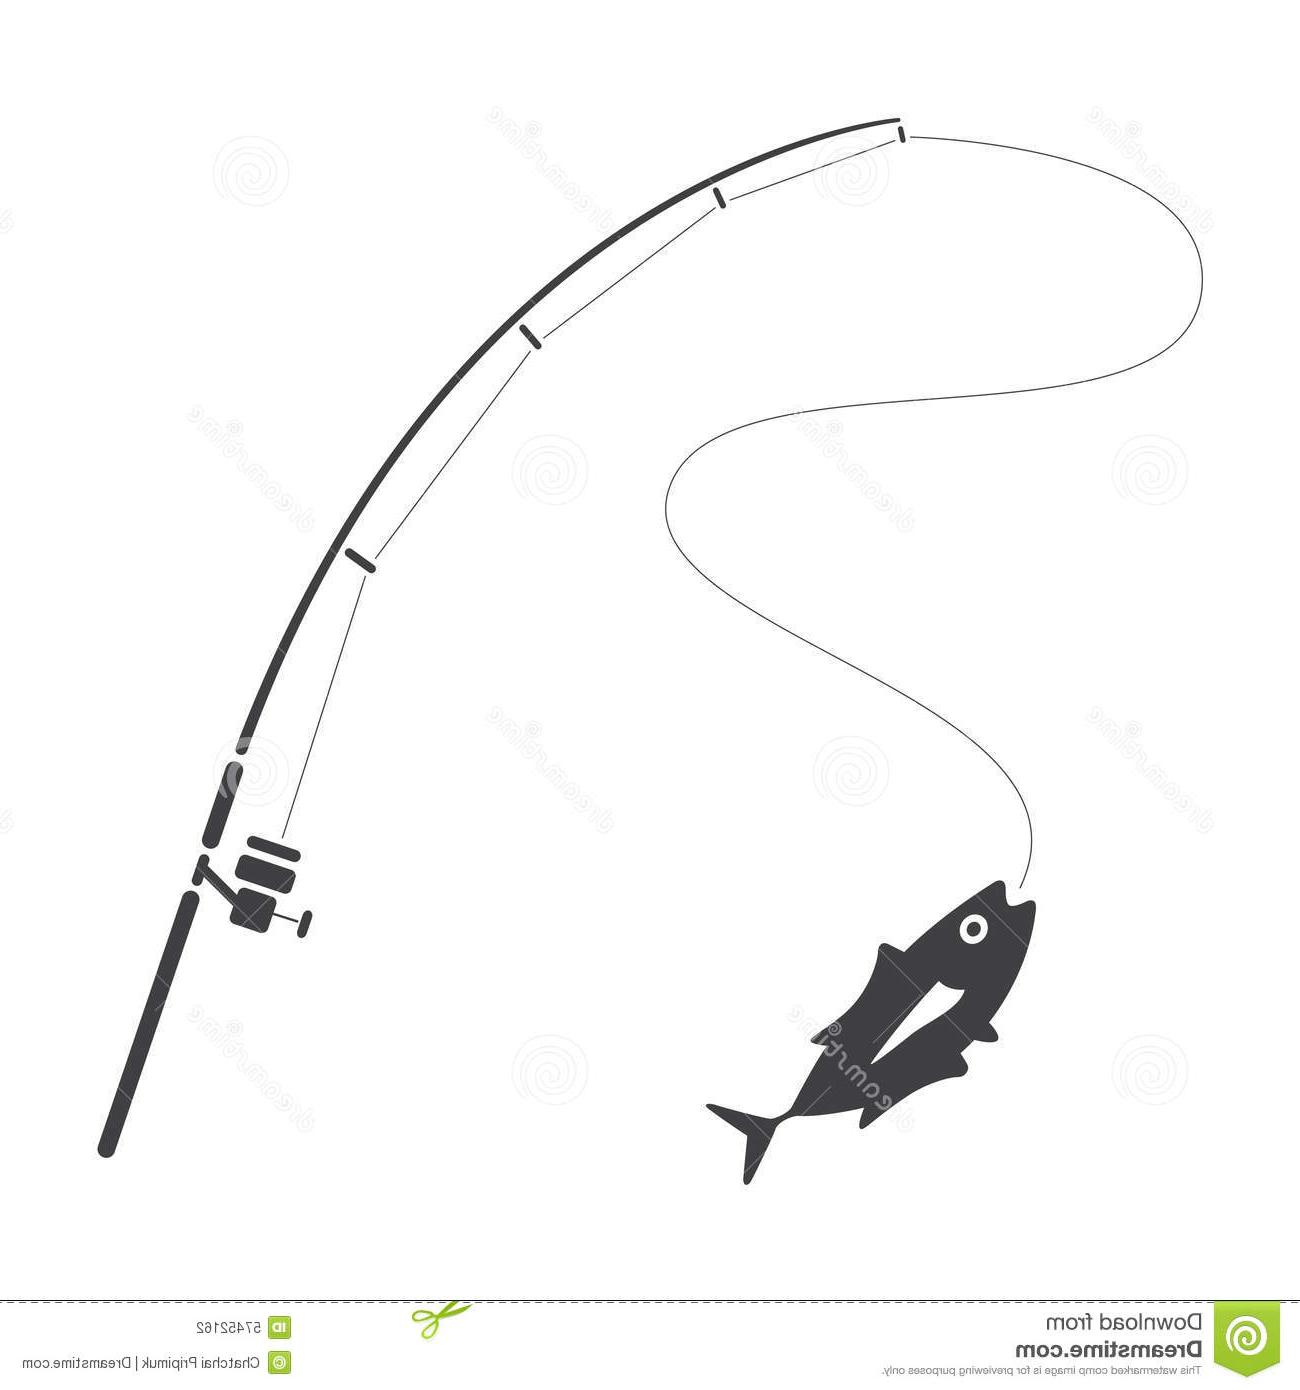 1,720 Fishing pole vector images at Vectorified.com